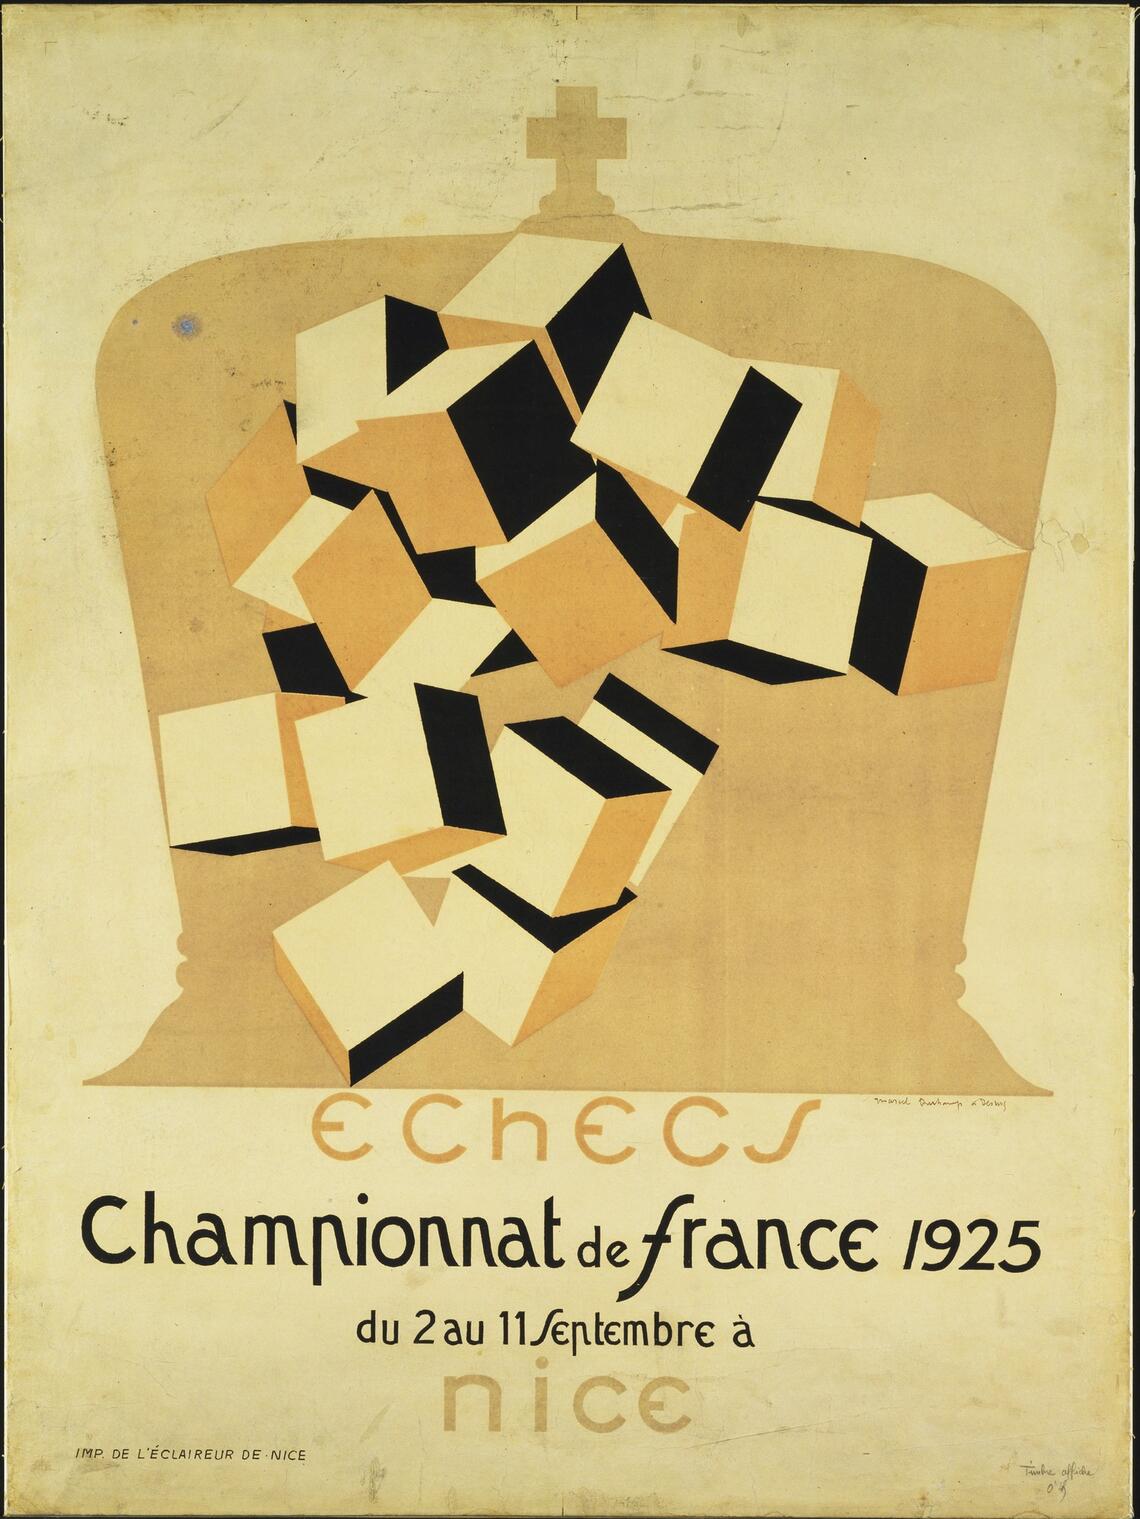 Chamnionat de France, 1925